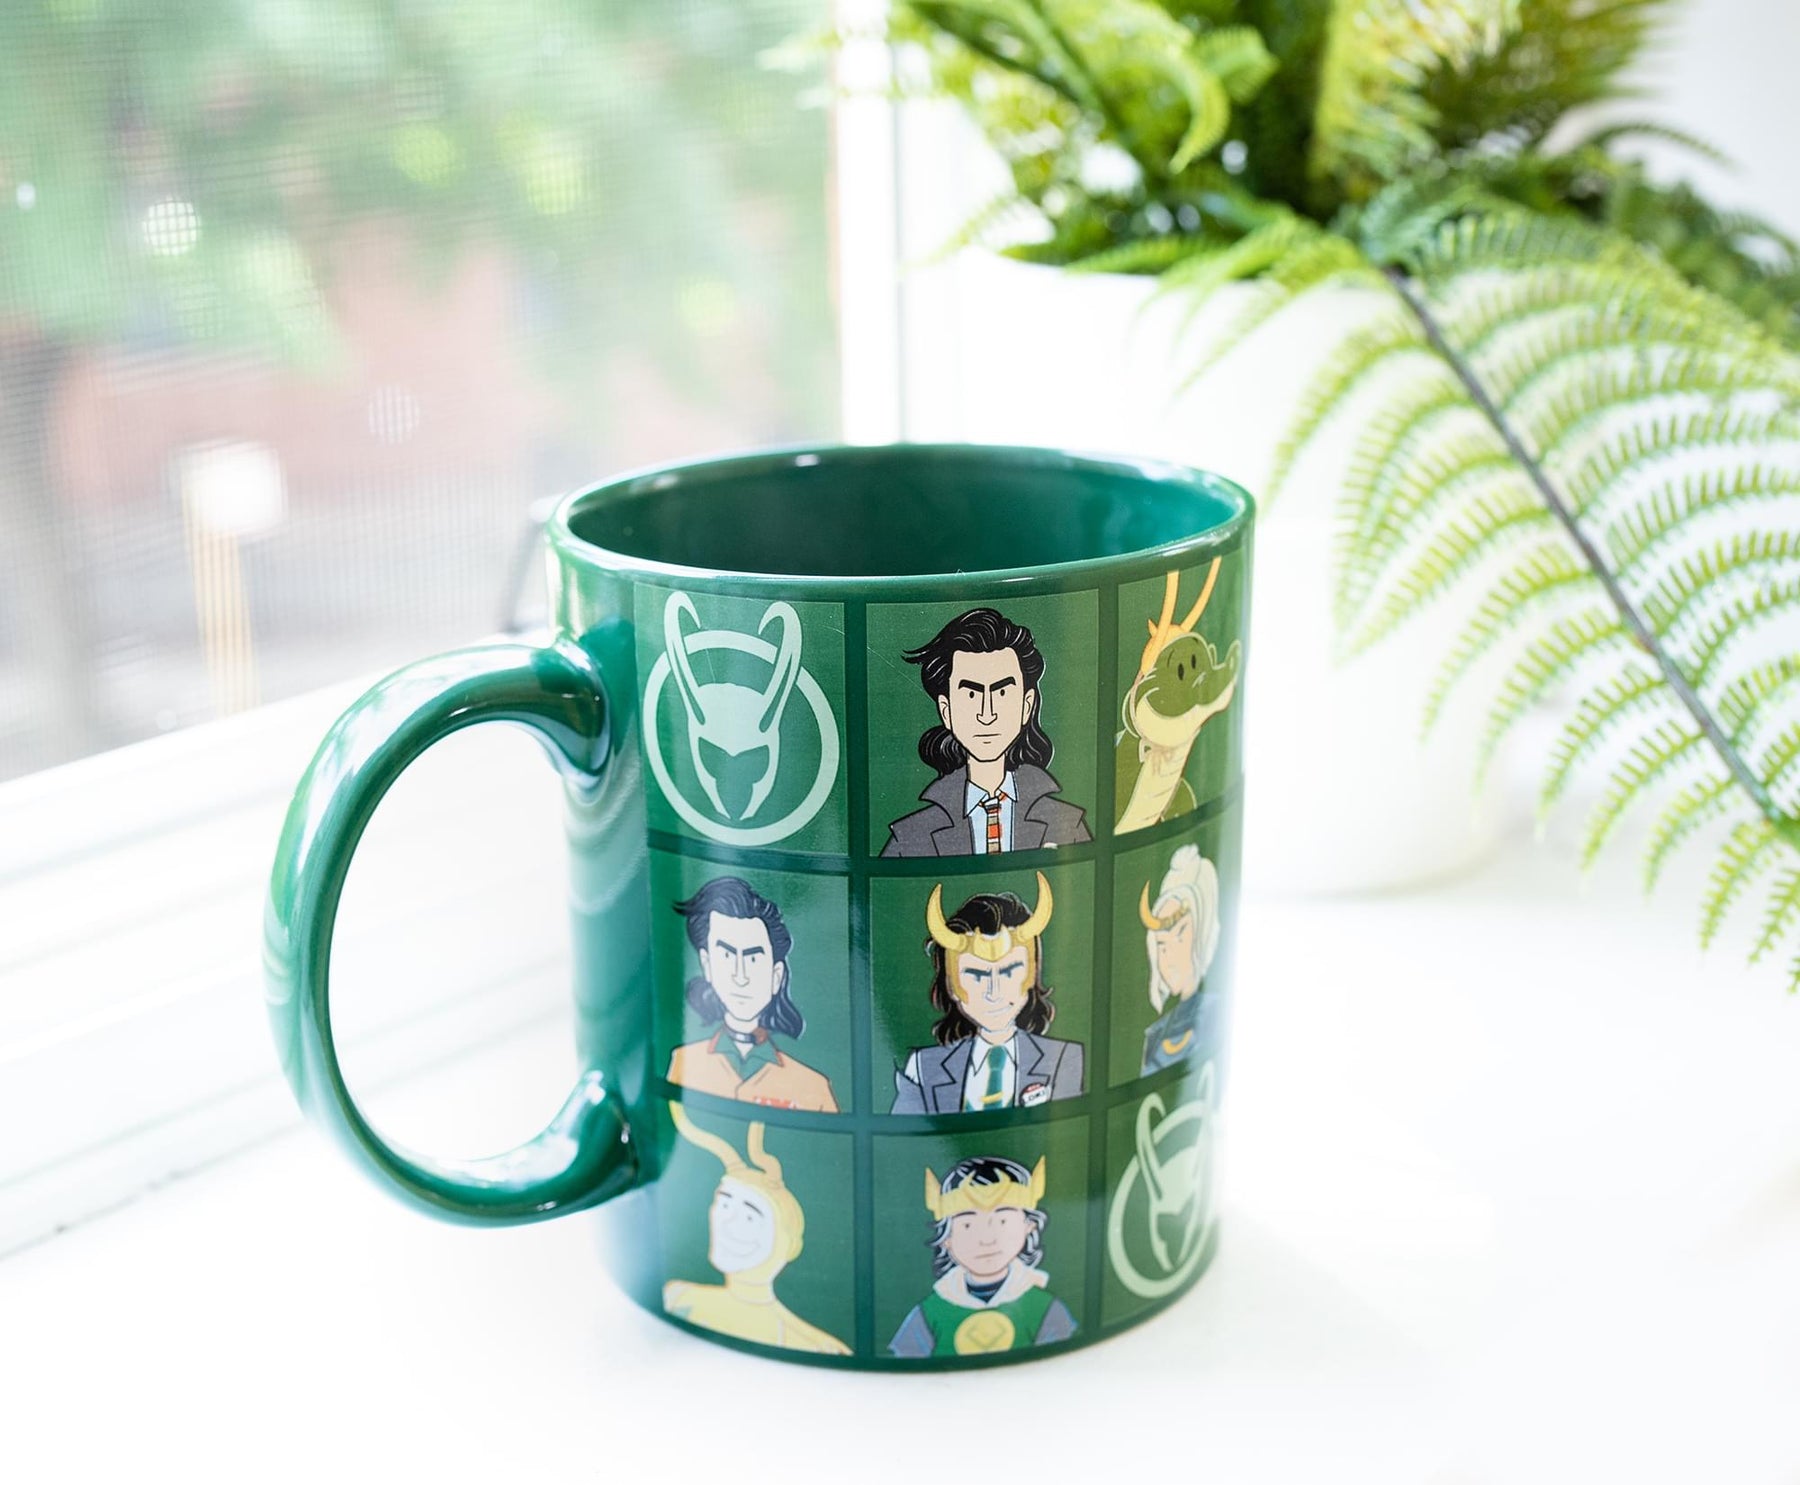 Marvel Studios Loki "Glorious Purpose" Ceramic Mug | Holds 20 Ounces